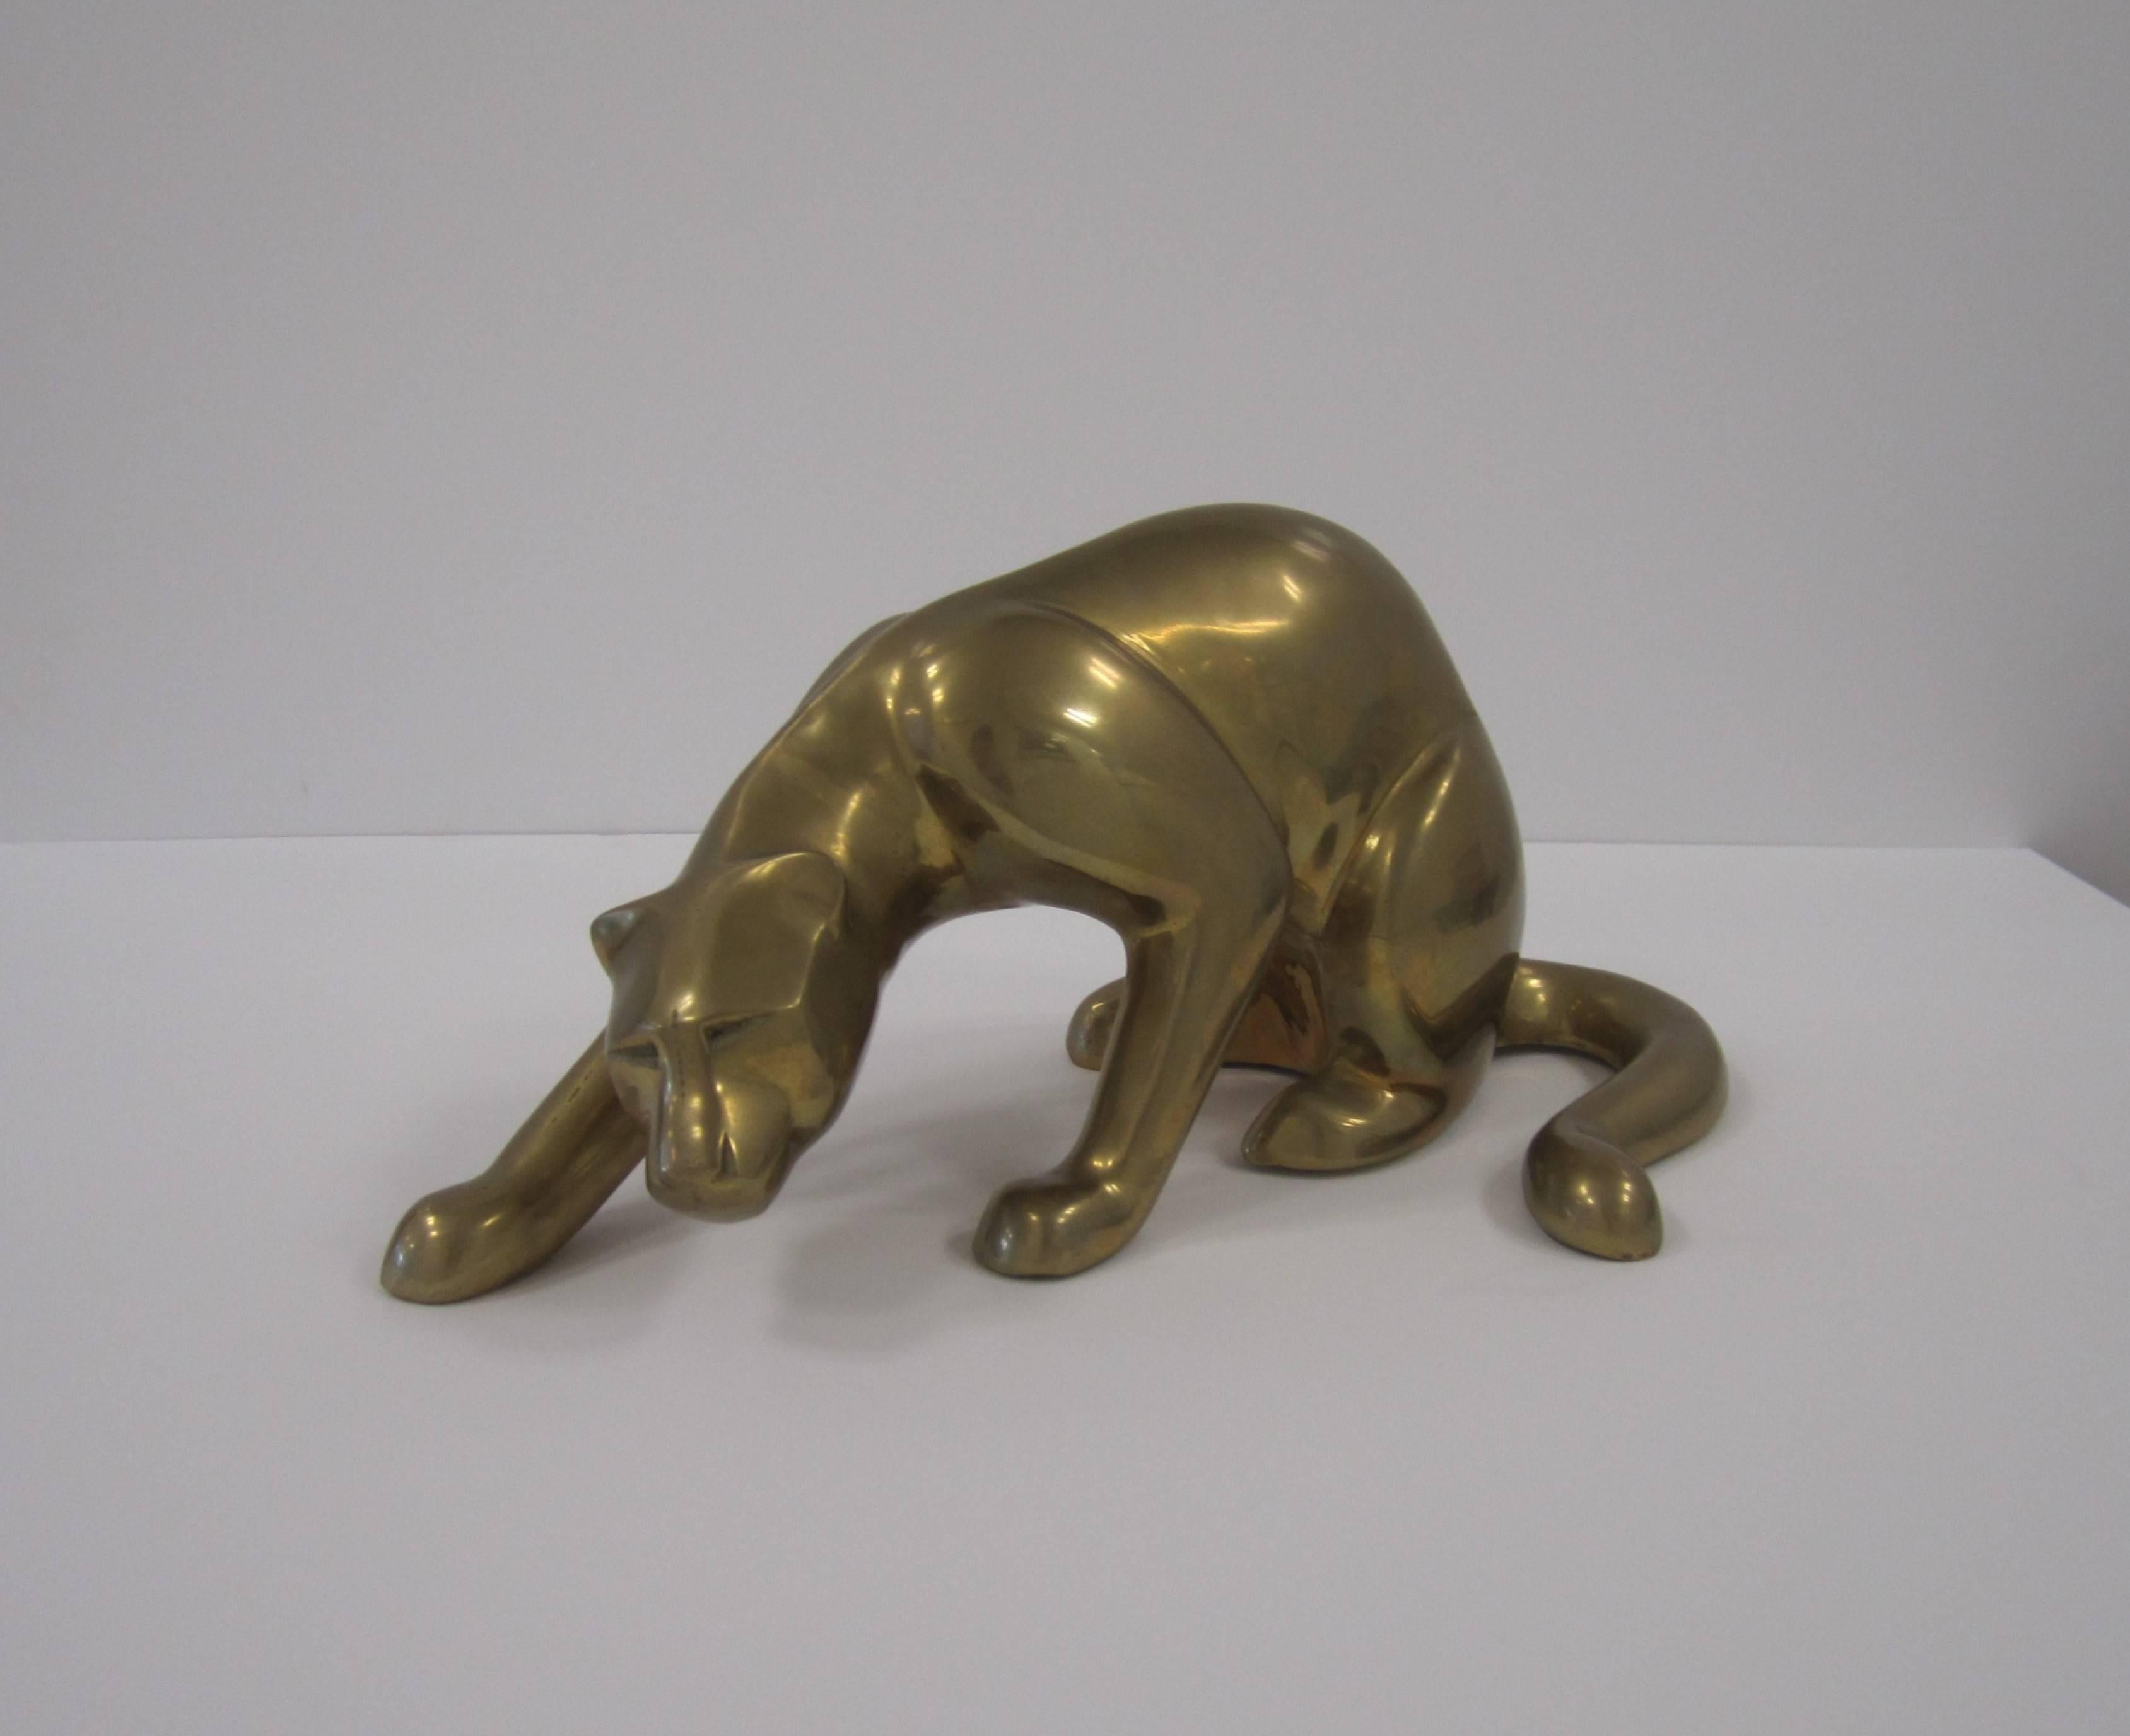 A substantial vintage Art Deco panther cat sculpture cast in brass, circa 1970s.
Measurements include: 8